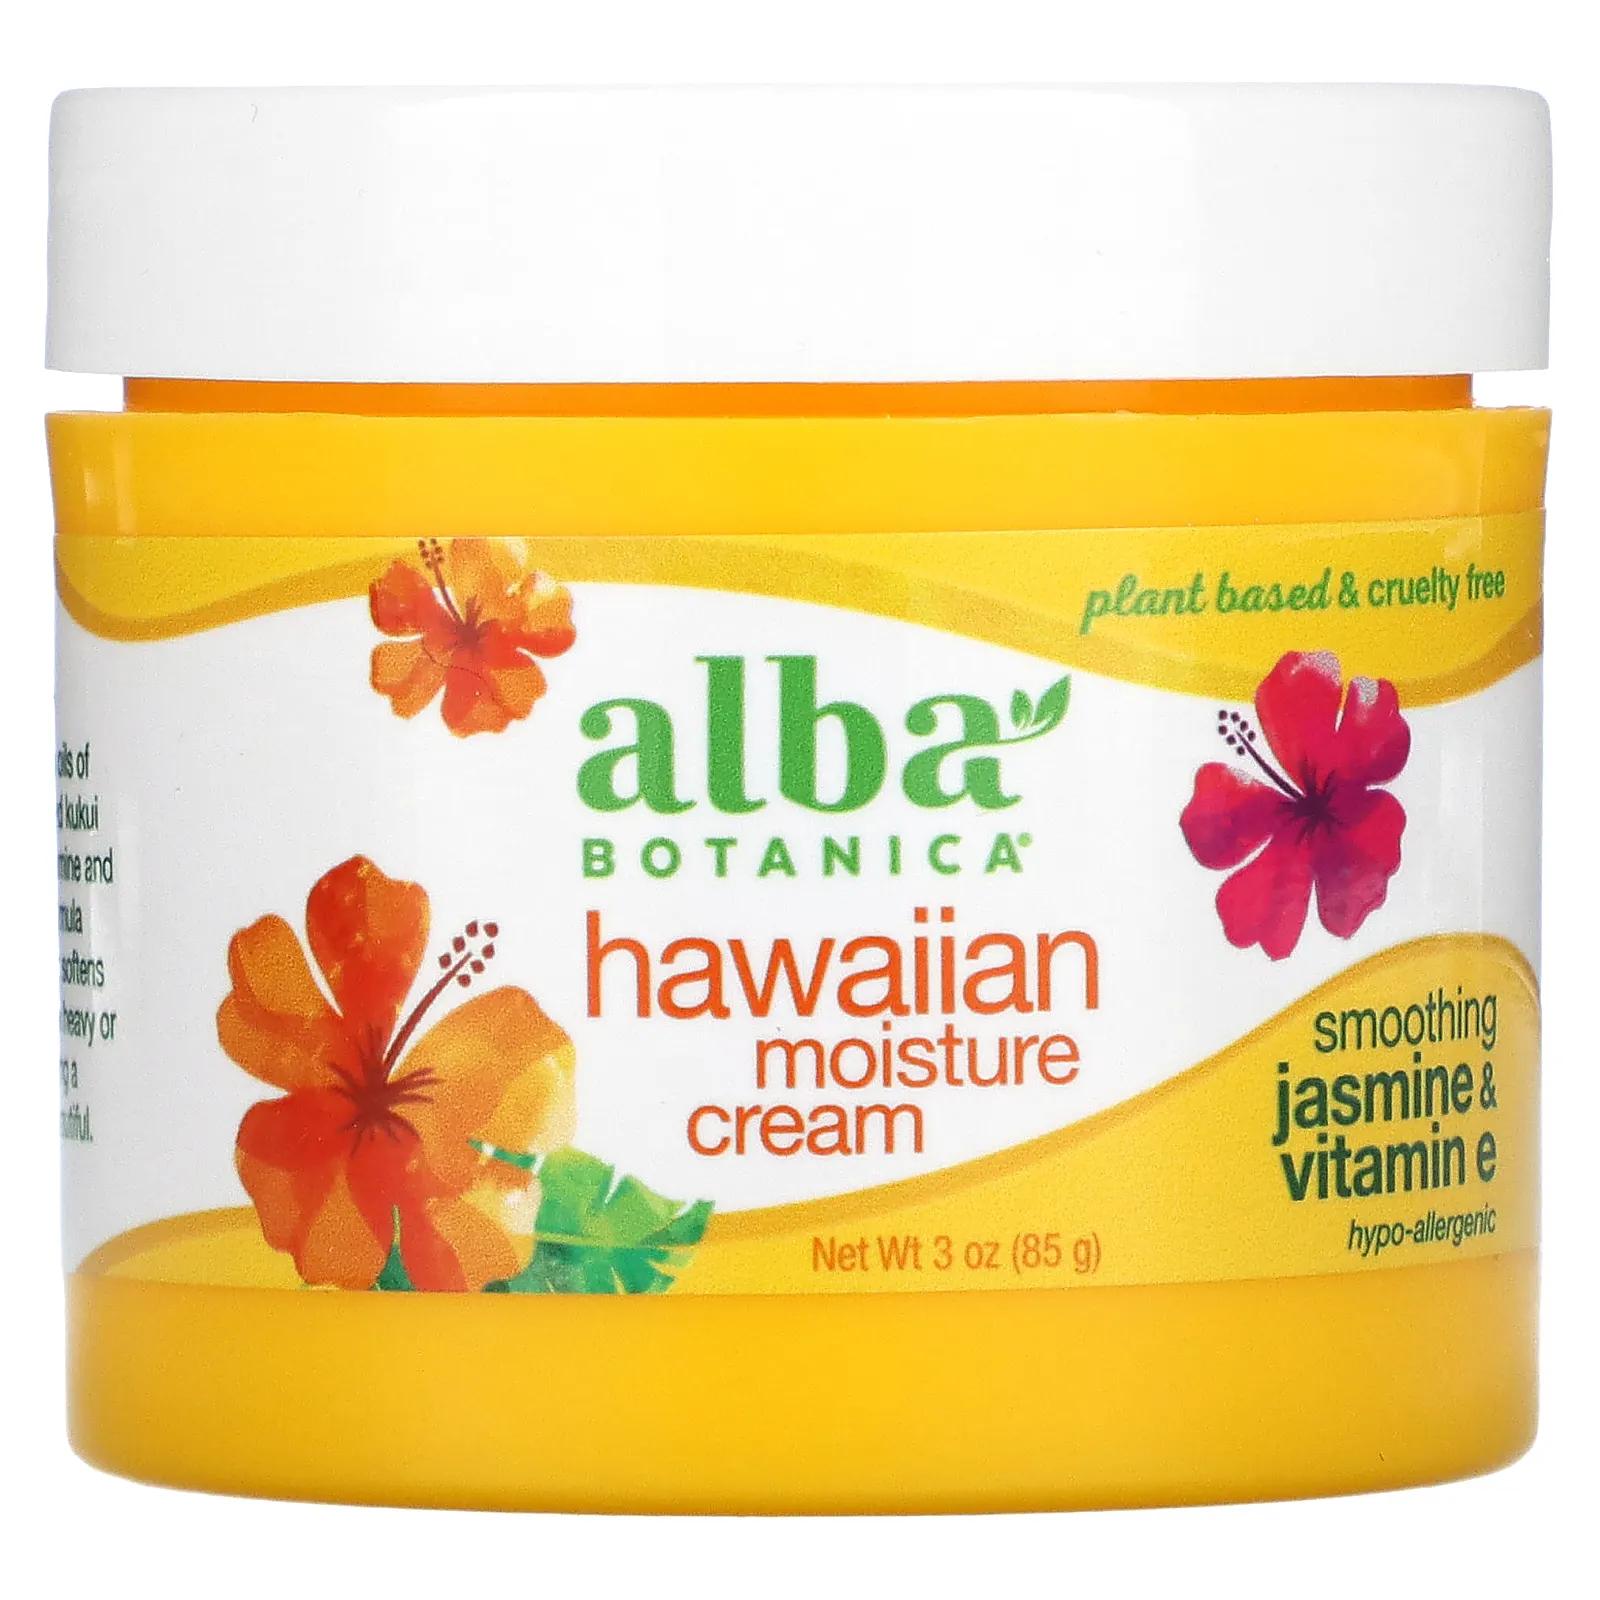 Alba Botanica Hawaiian Moisture Cream увлажняющий крем с жасмином и витамином E 85 г (3 унции) alba botanica hawaiian moisture cream увлажняющий крем с жасмином и витамином e 85 г 3 унции